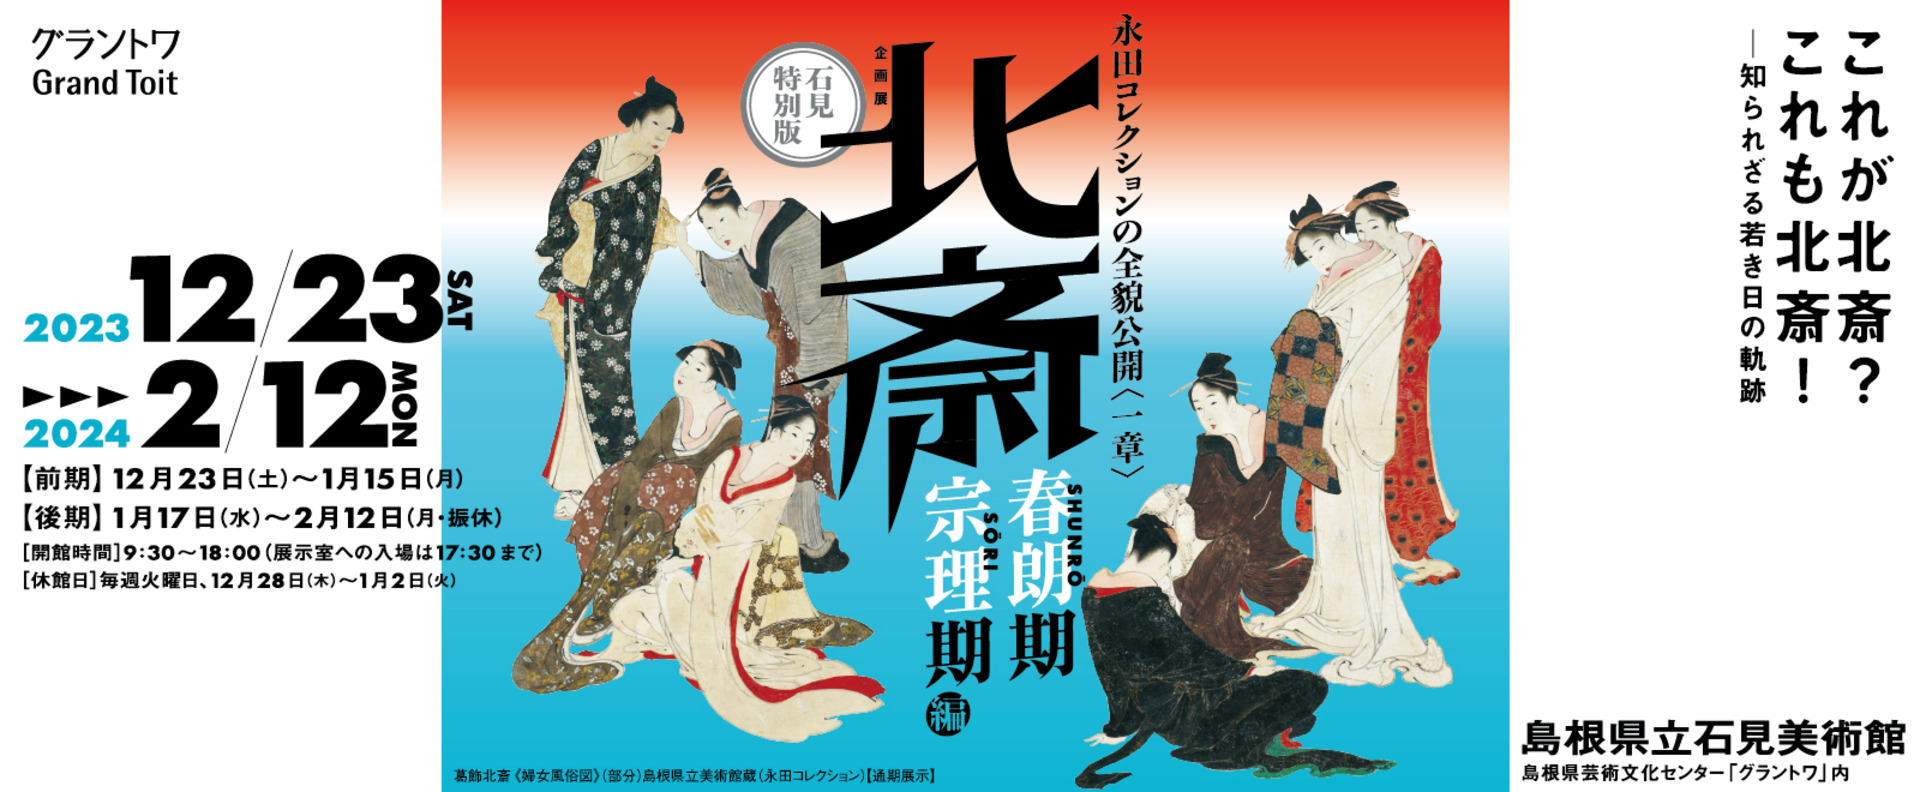 1920x banner hokusai nagata iwami2023d